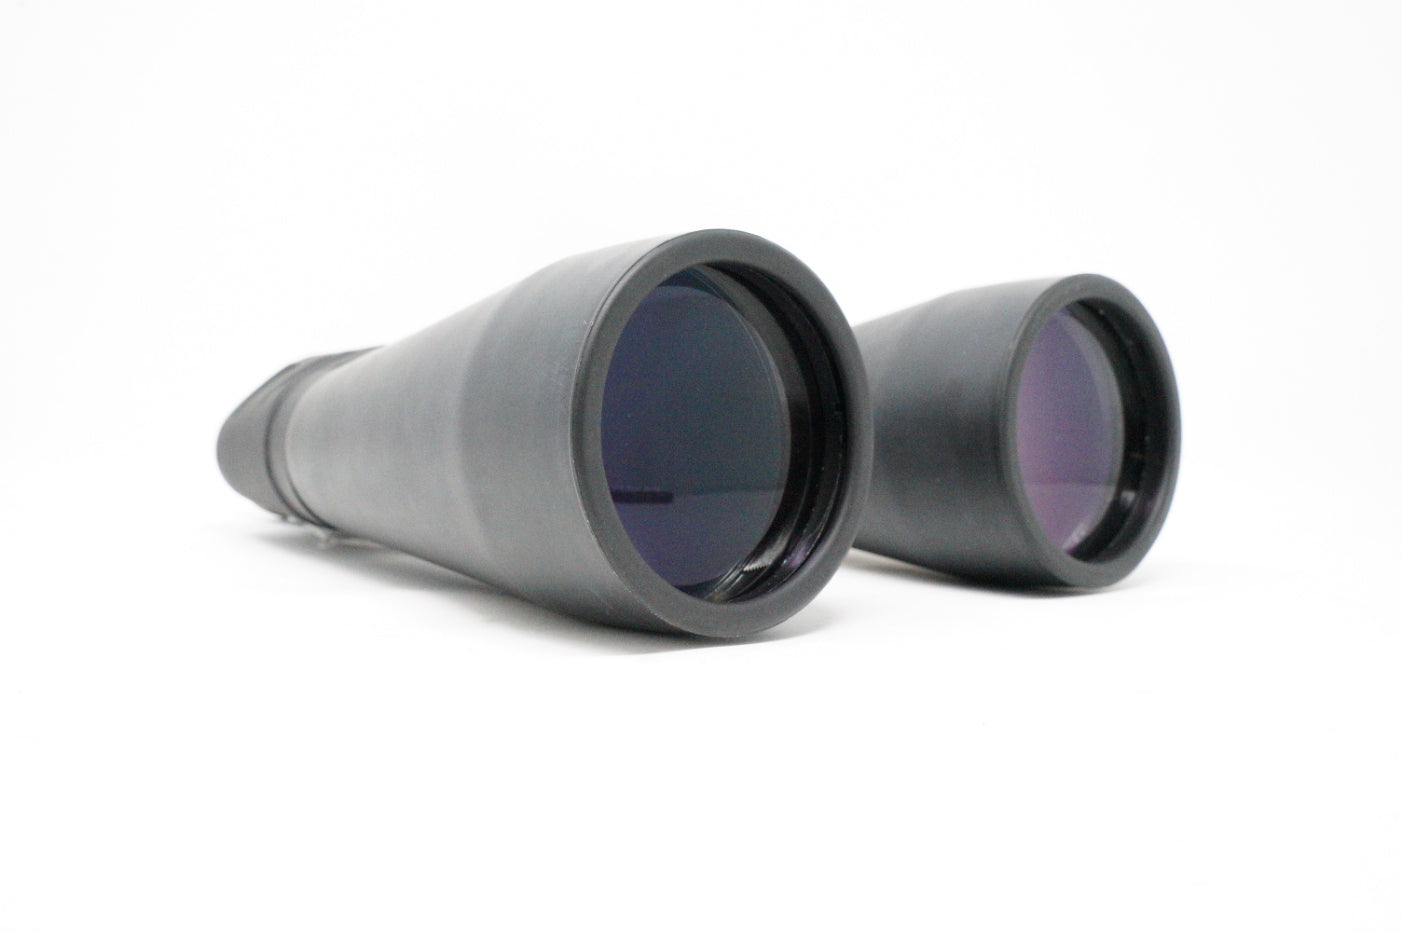 Used Revelation 15x70 Astro binoculars